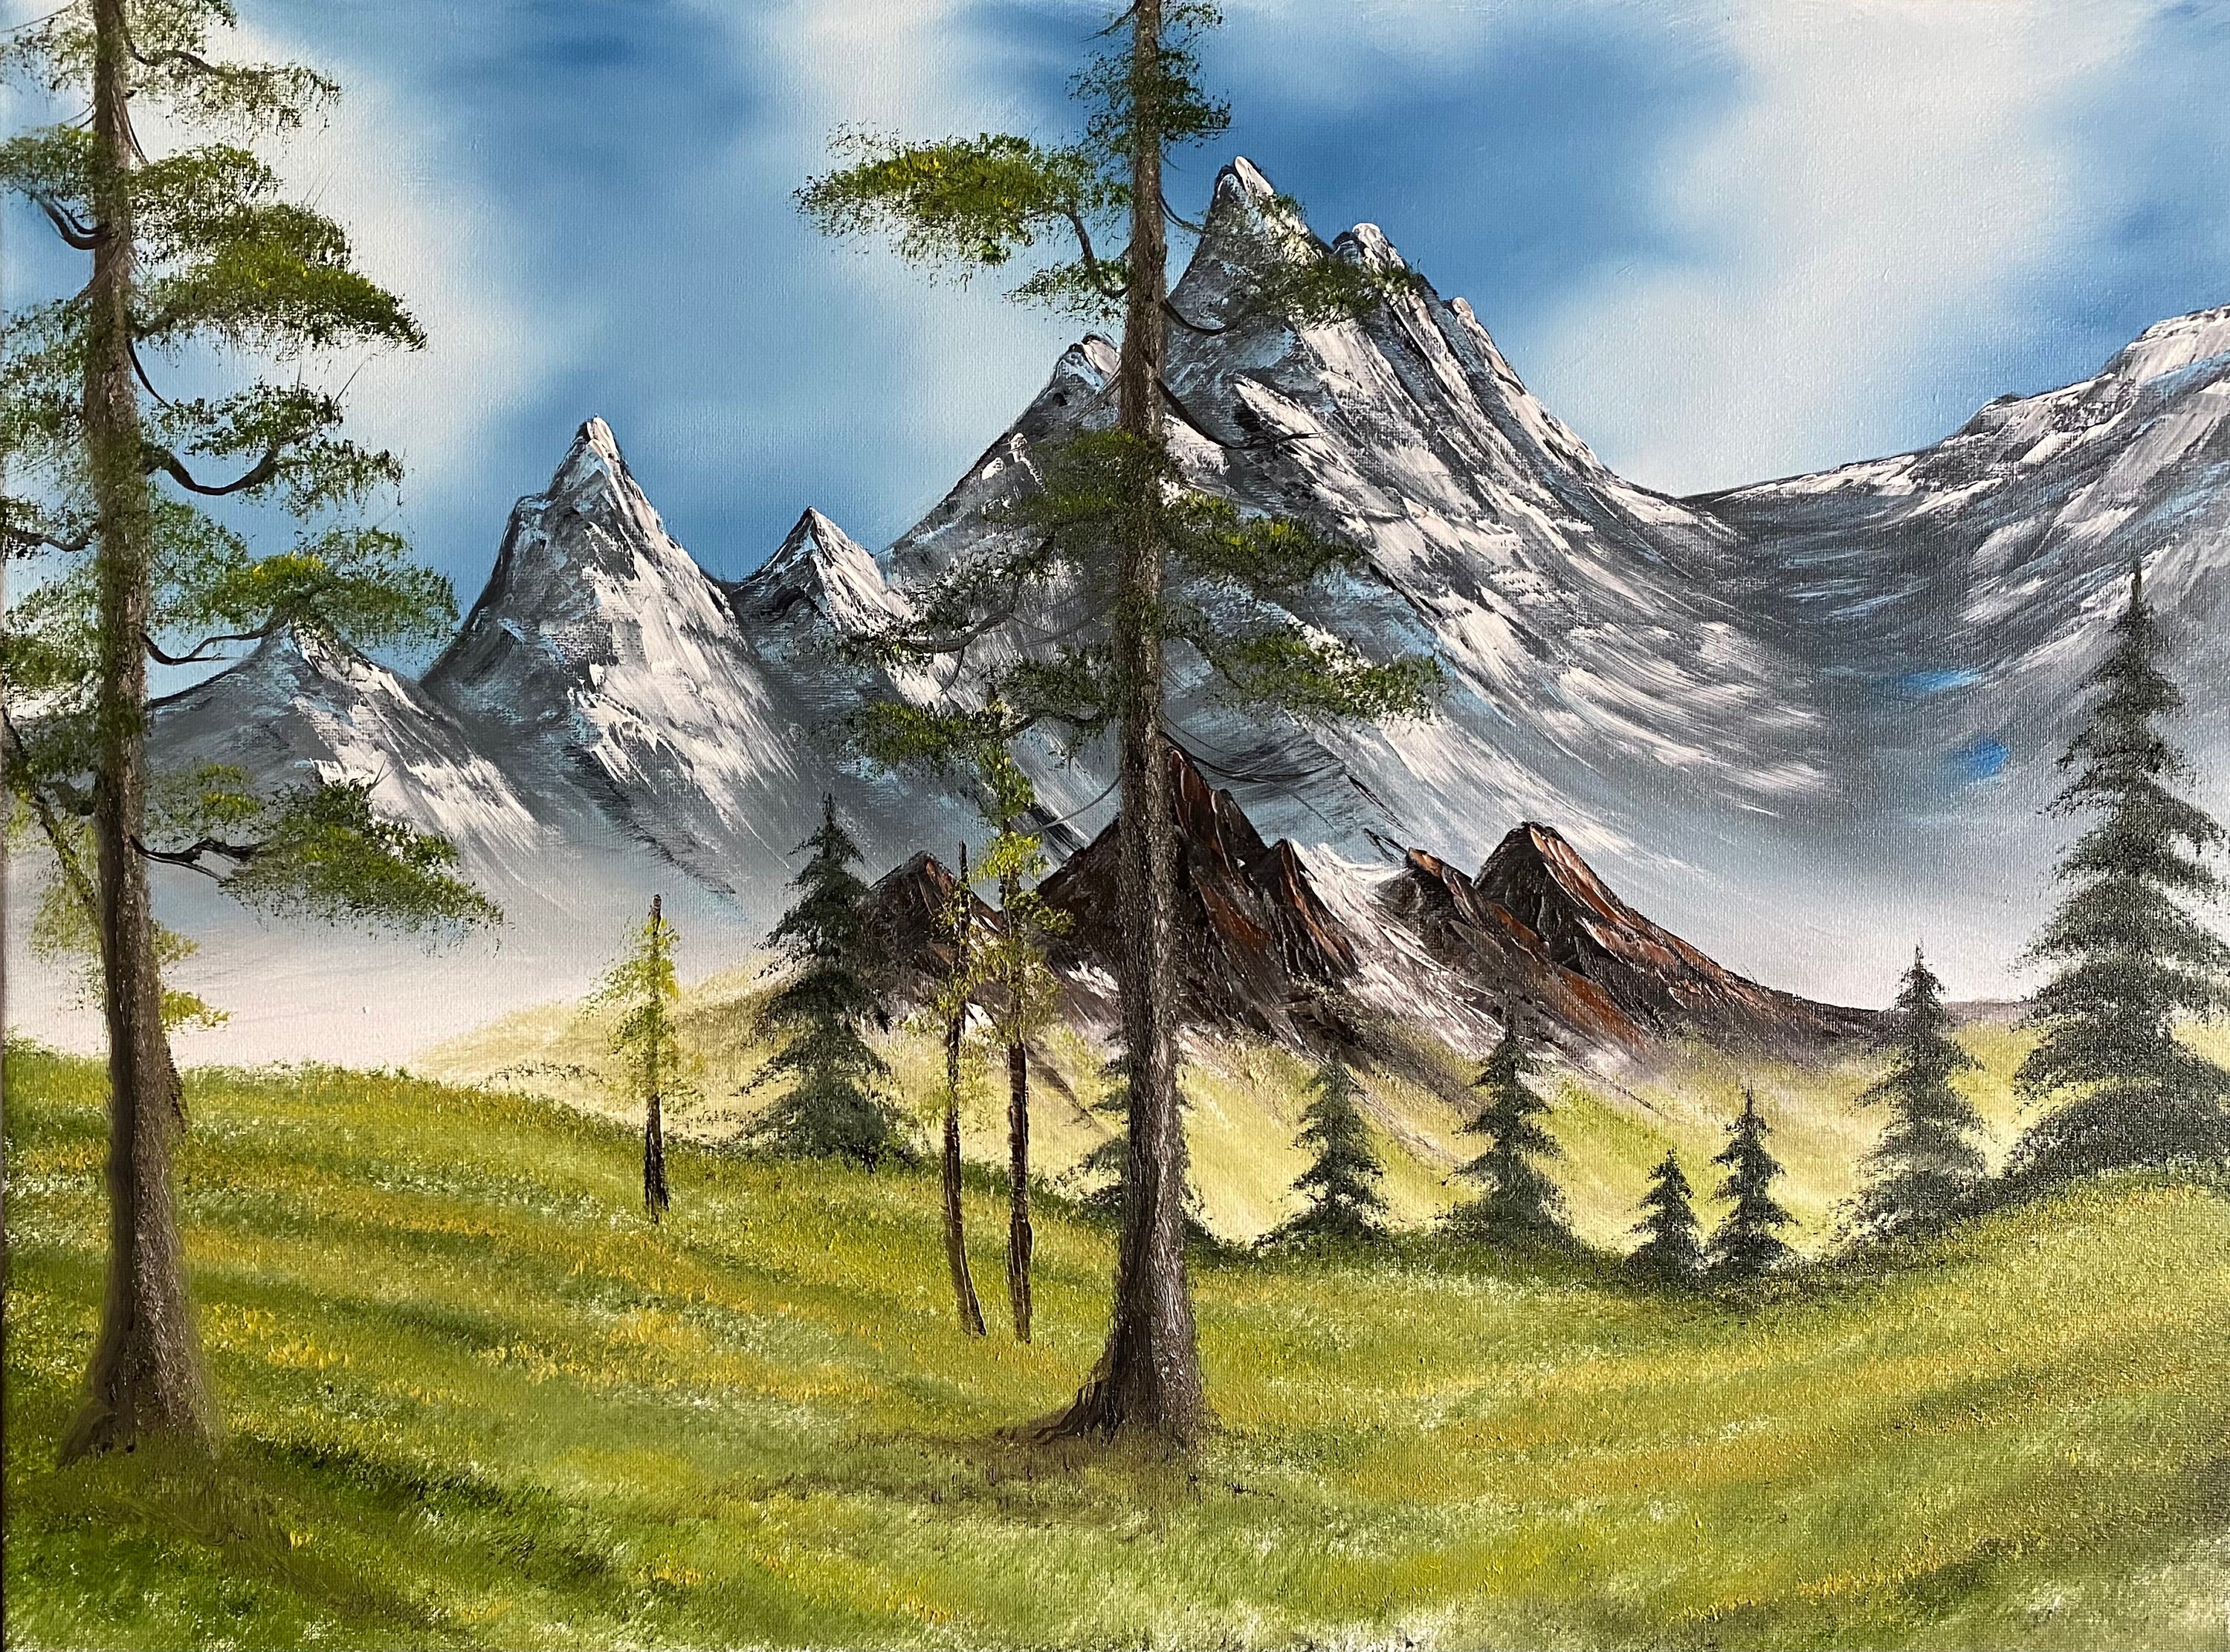 Original Surreal Winter Forest Lake Landscape Painting Bob Ross Inspired  Folk Art 